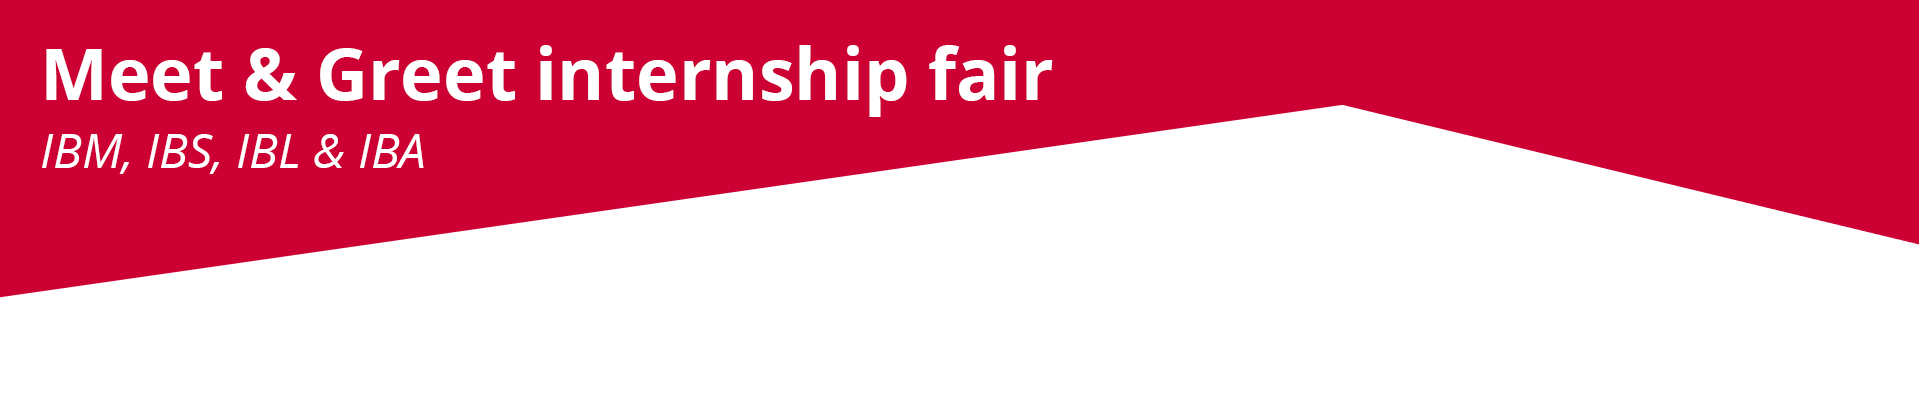 Meet & greet internship fair 2020 - jaar 3